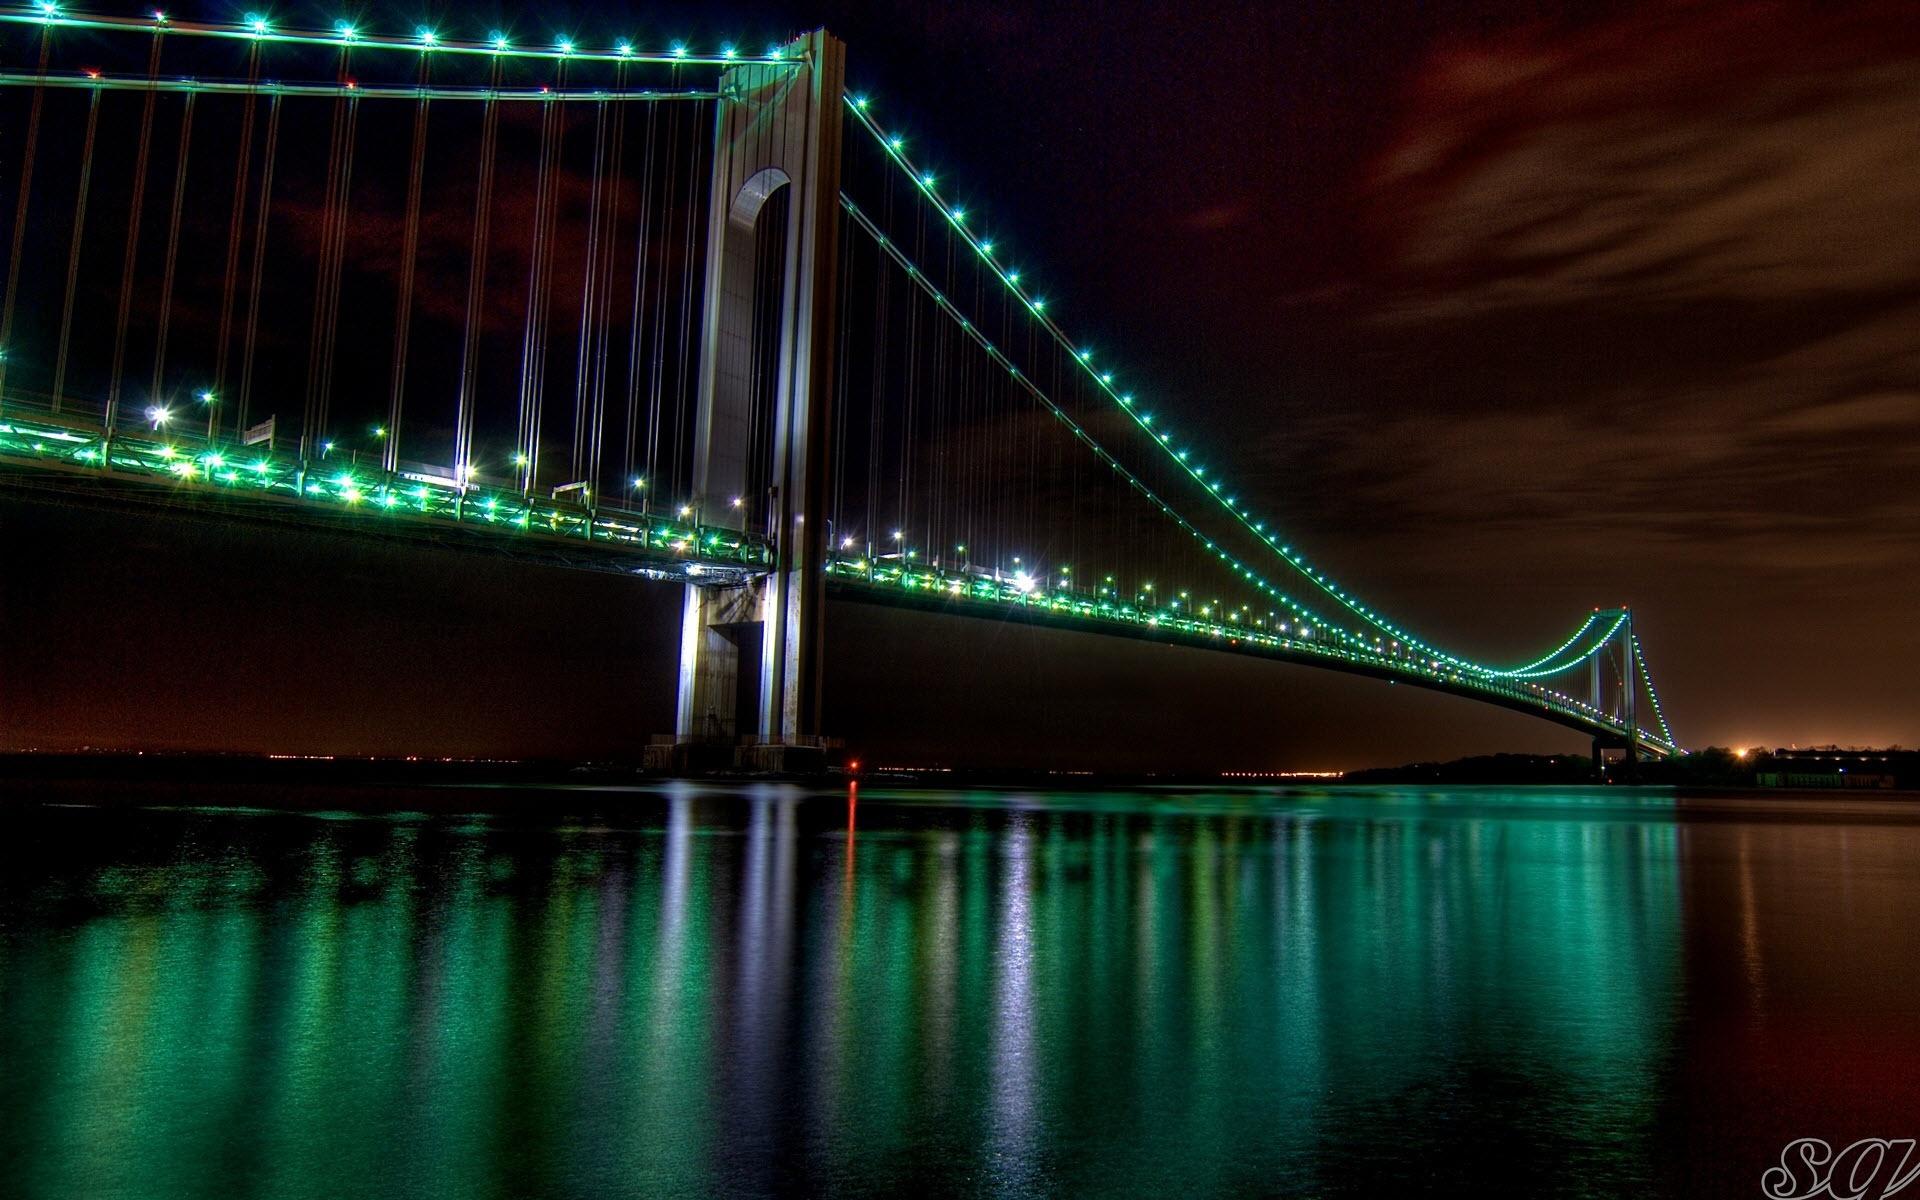 The Golden Gate Bridge Night View Wallpaper in jpg format for free